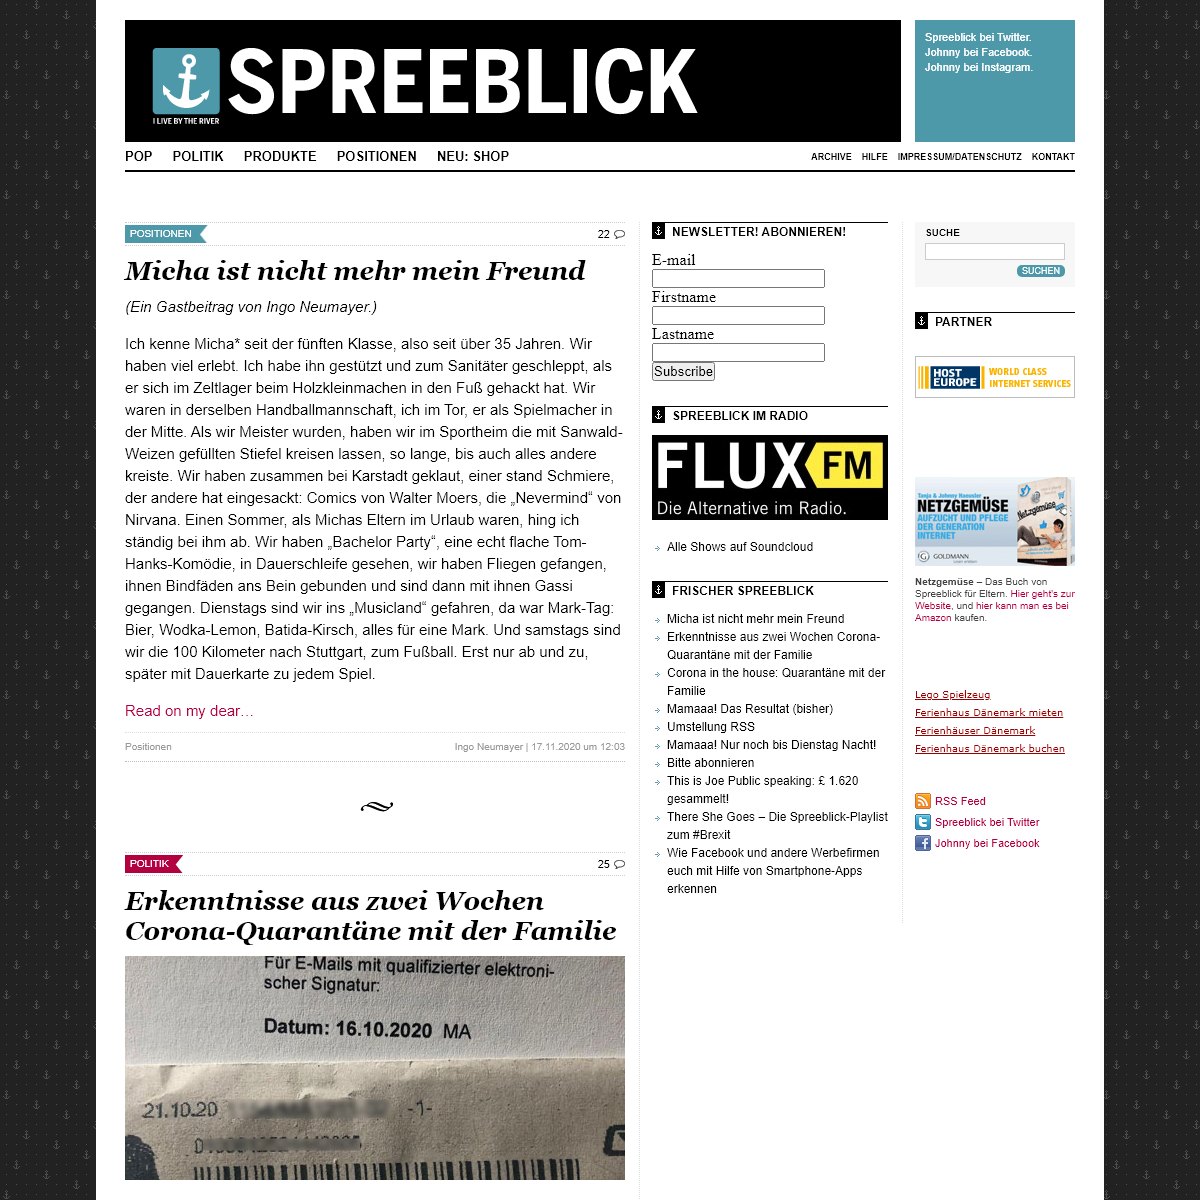 A complete backup of spreeblick.com